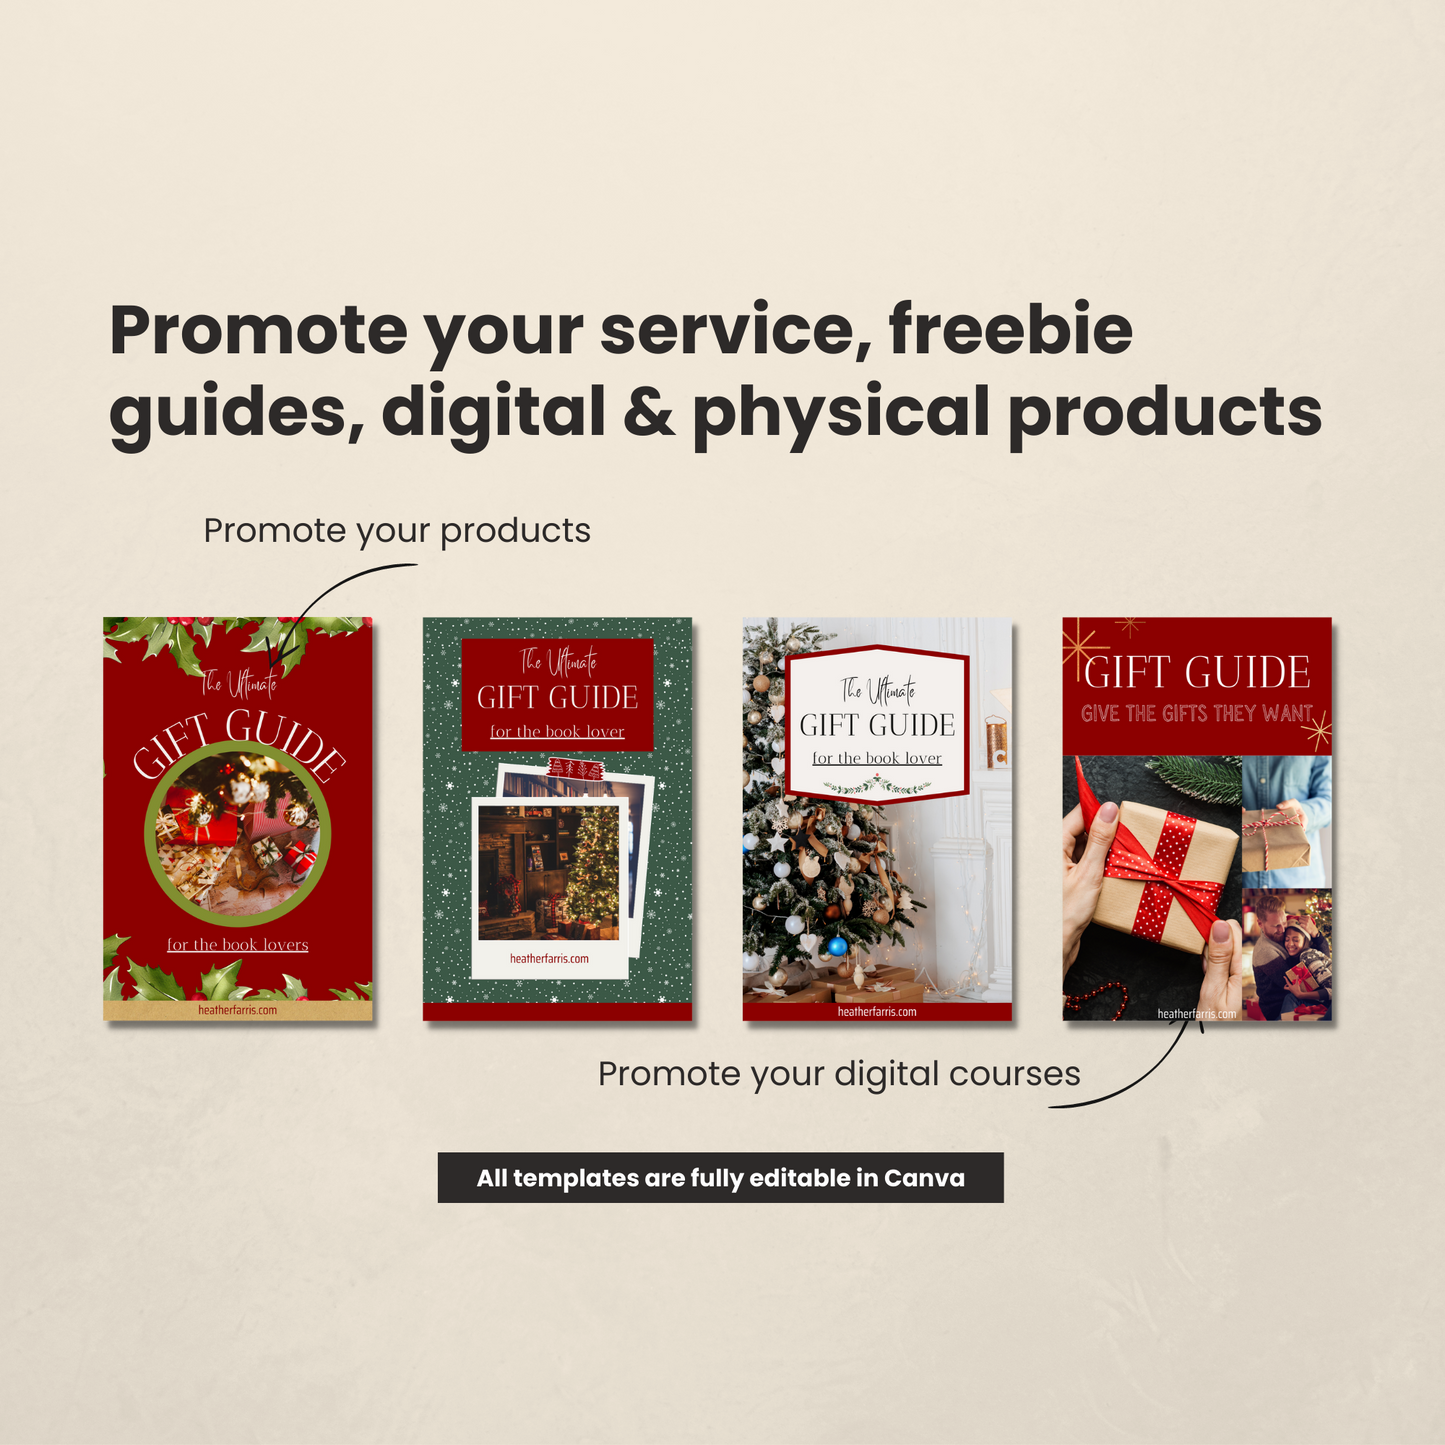 Christmas Gift Guide Pinterest Templates